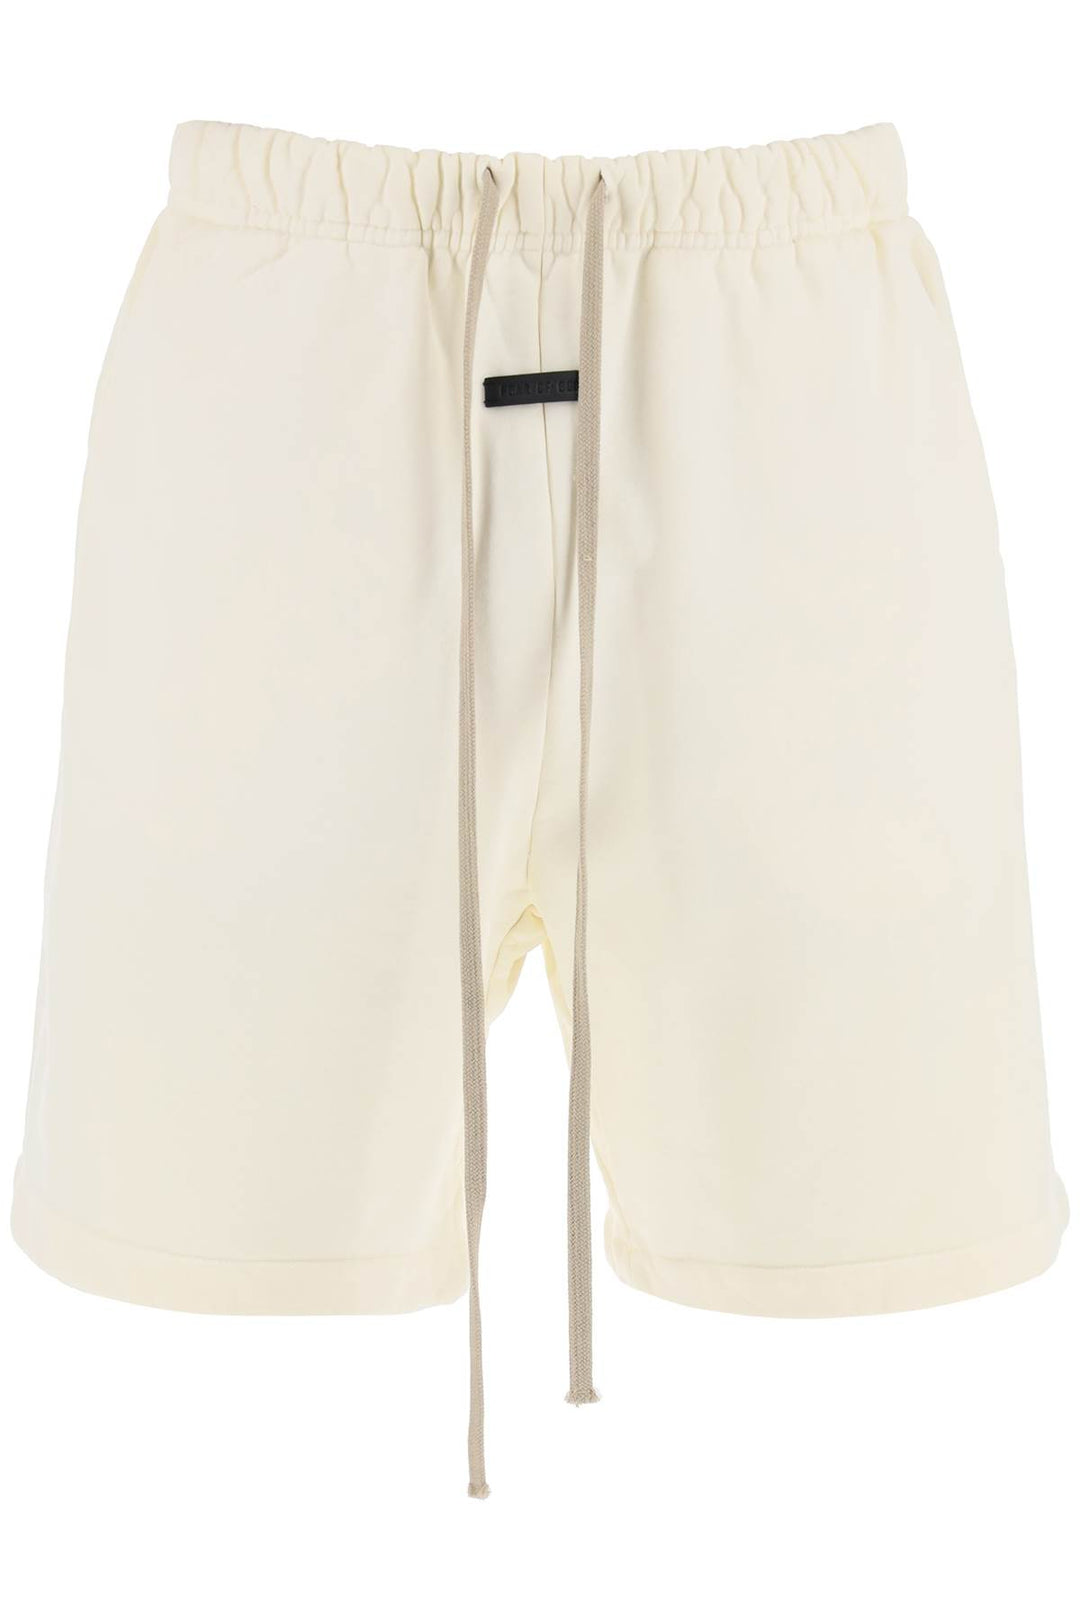 Fear Of God Cotton Terry Sports Bermuda Shorts   Bianco